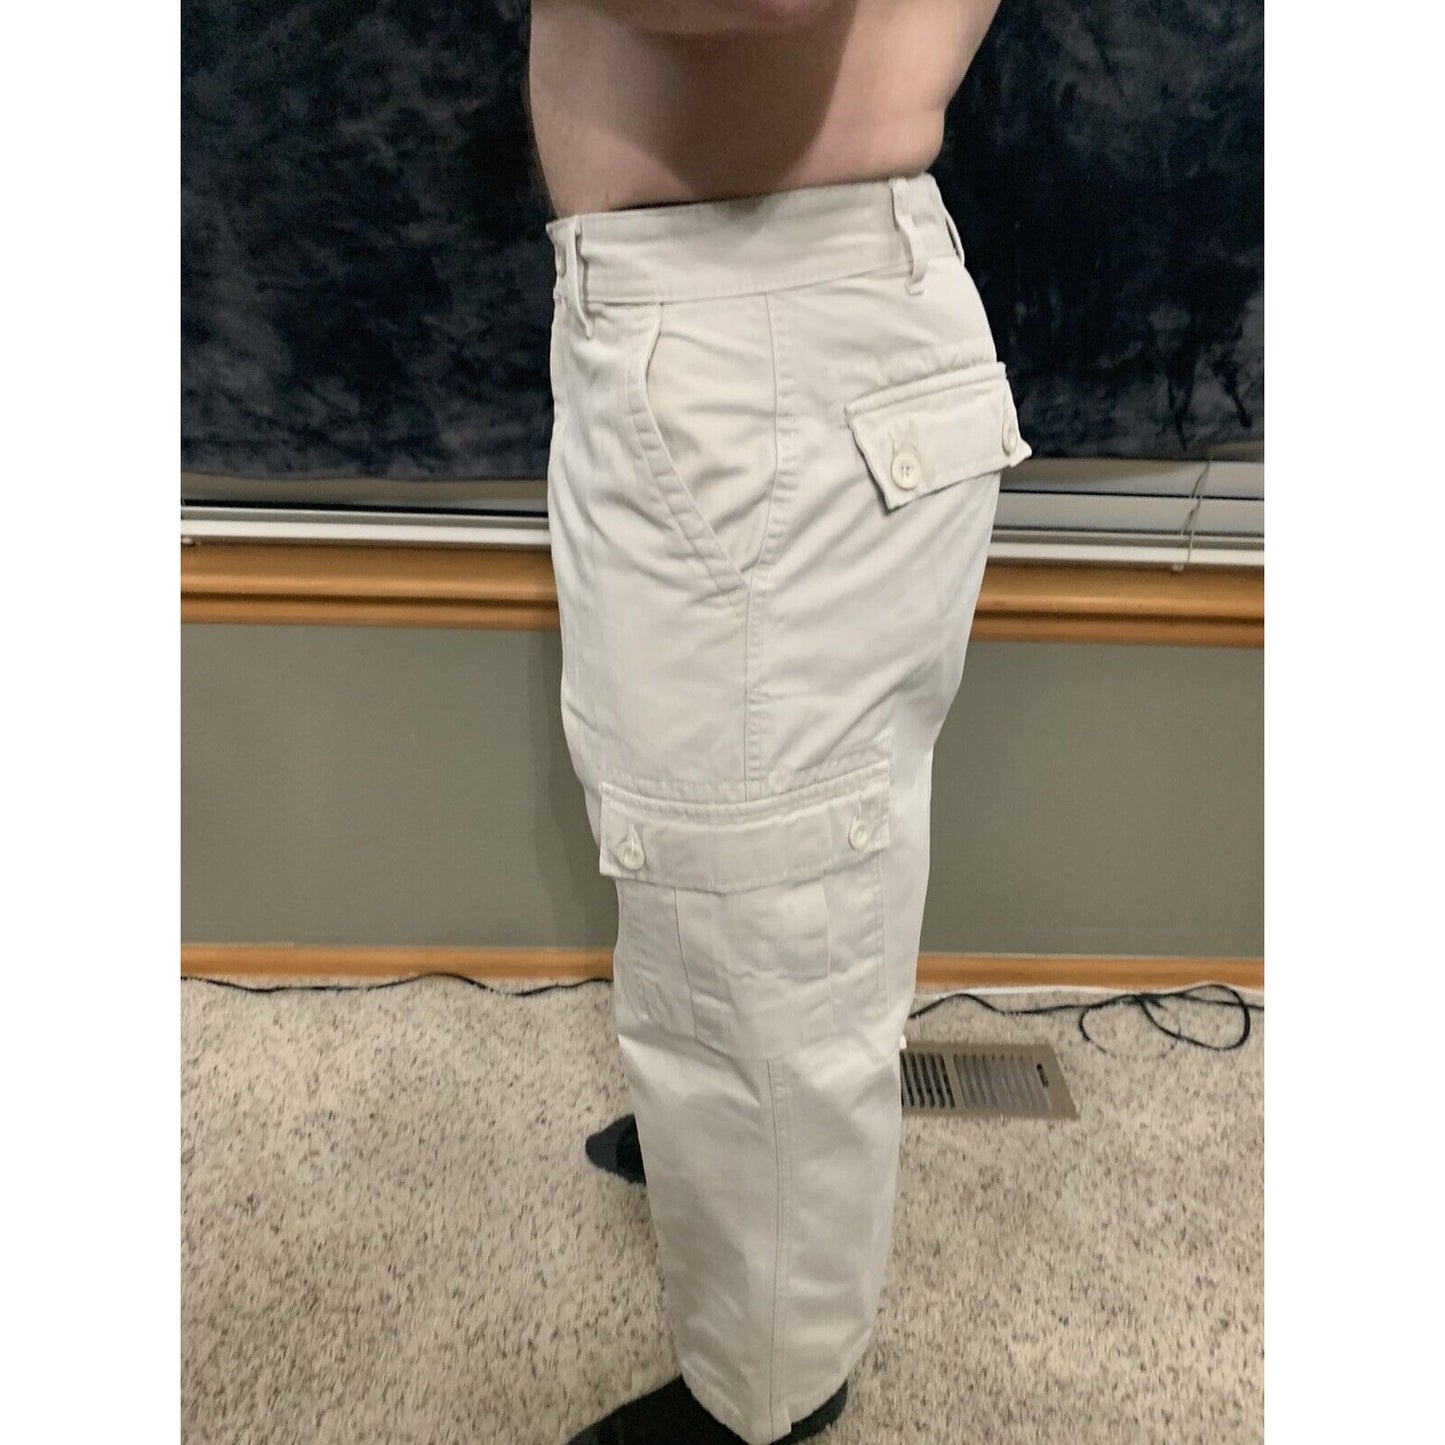 Arizona Jean Men’s Size 33/30 Relaxed Multi Pocket Khaki Pants